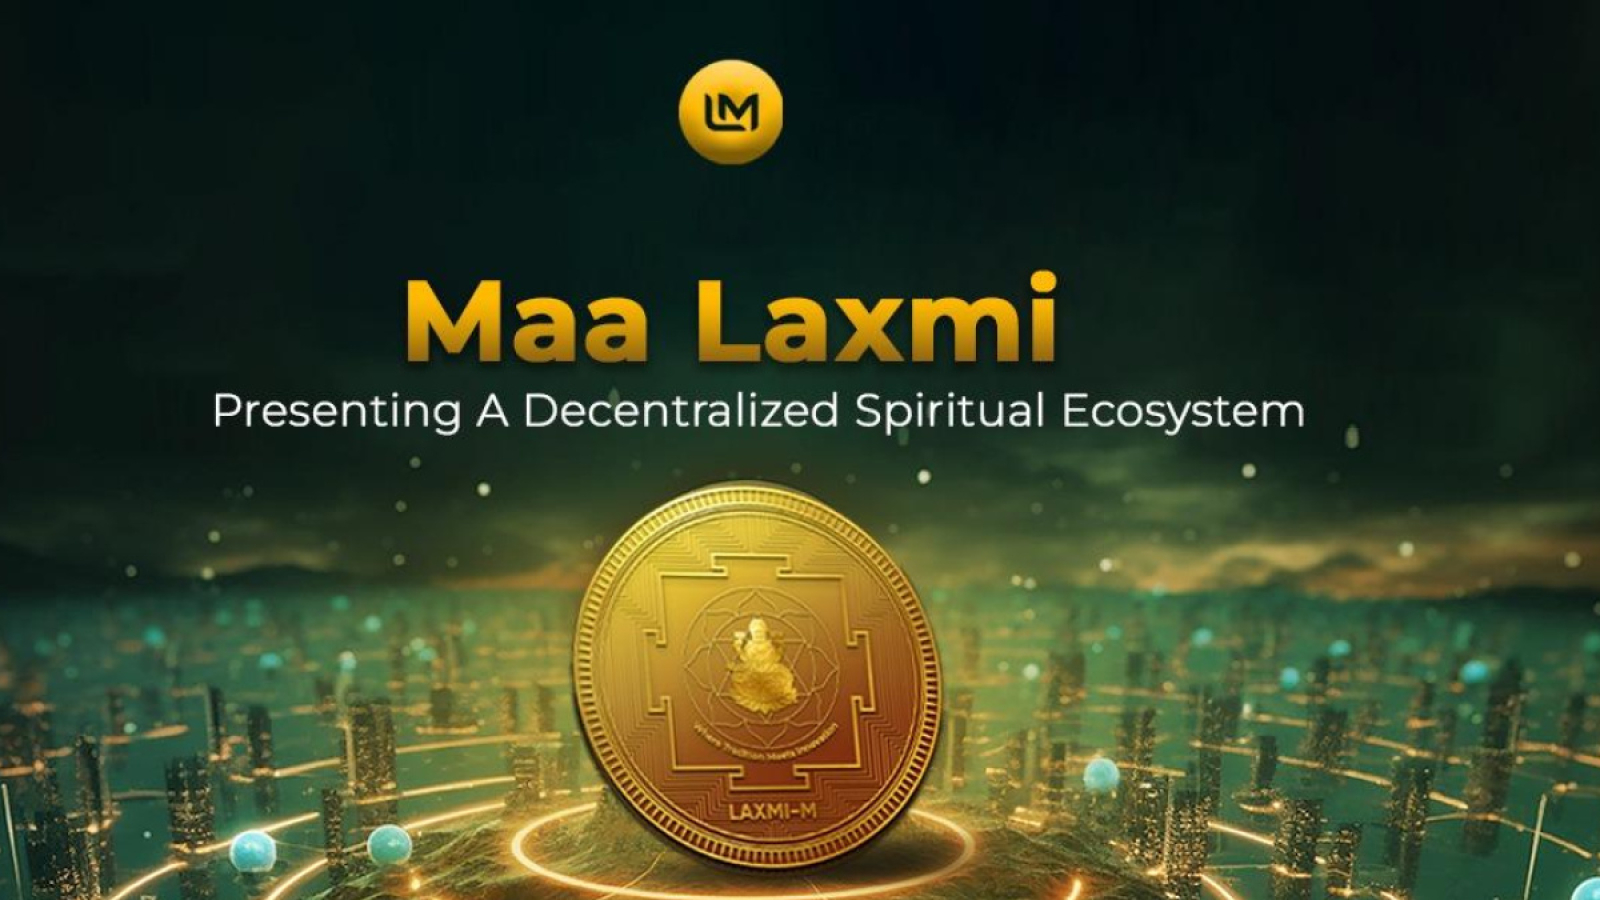 Laxmi M - Presenting A Decentralized Spiritual Ecosystem